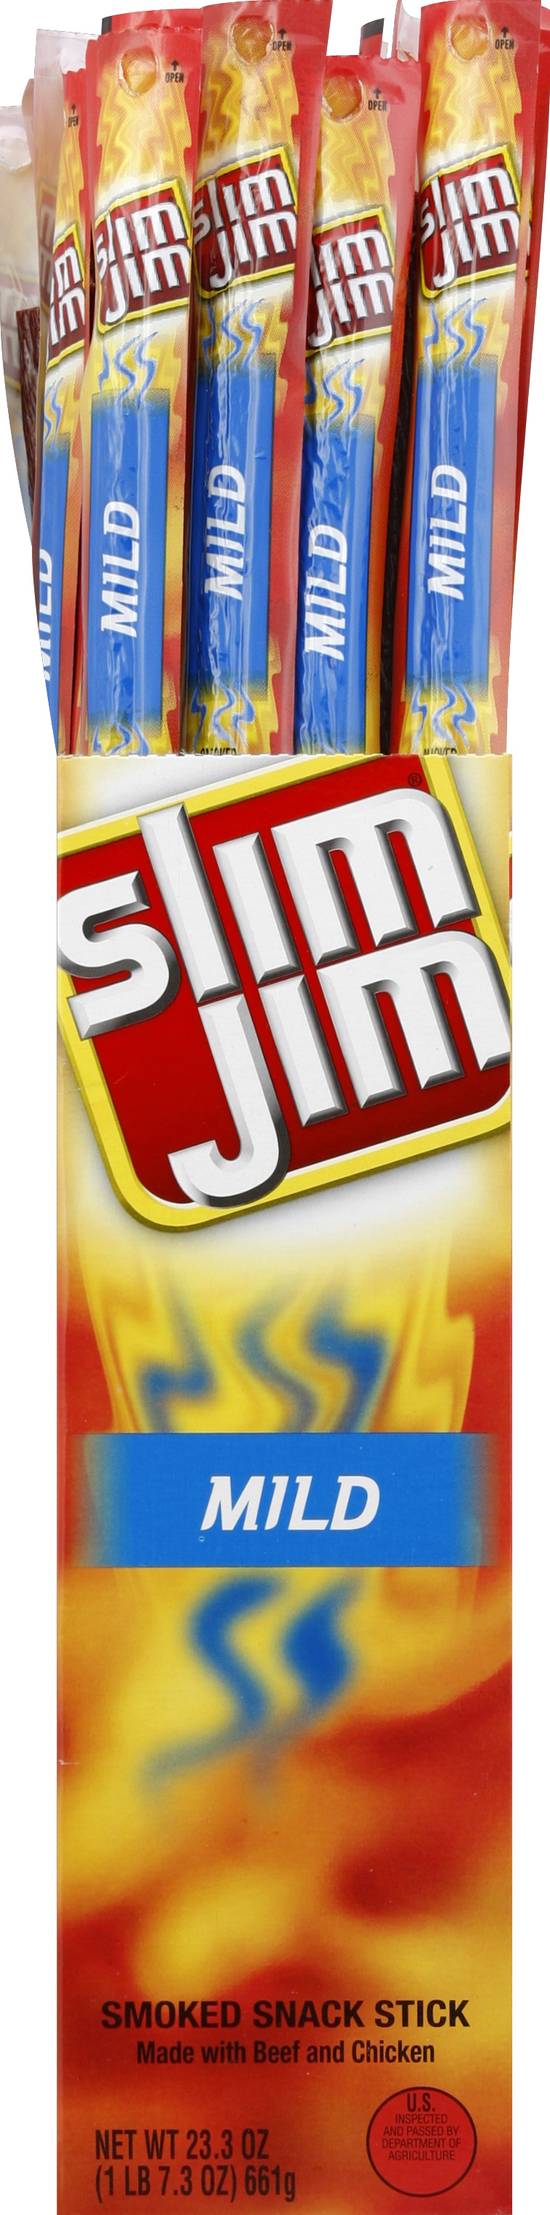 Slim Jim Mild Smoked Snack Stick